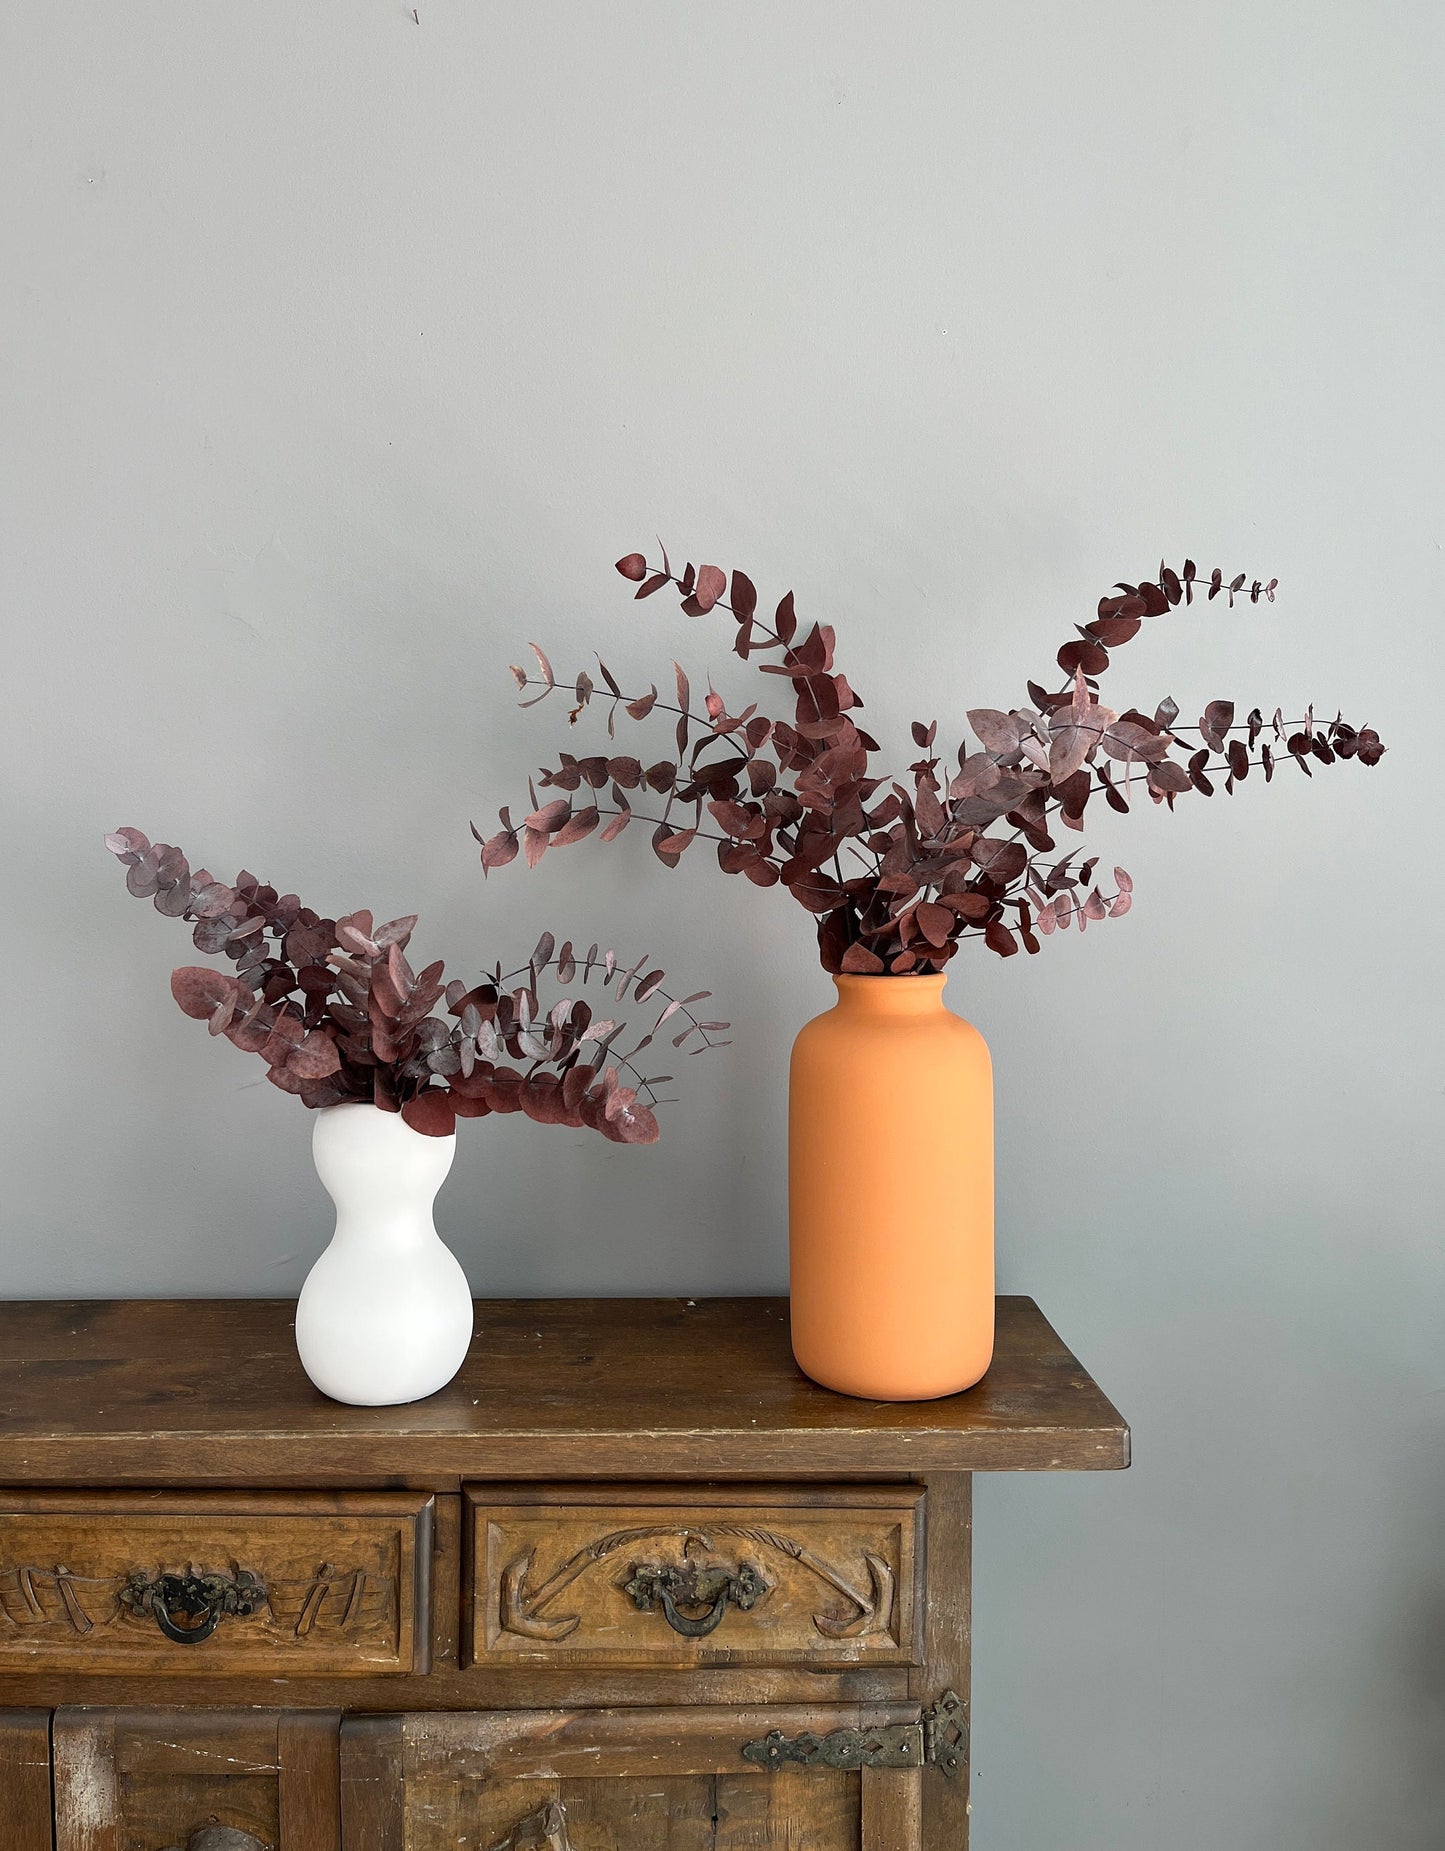 Eucalyptus in a vase, Vase arrangement, Dried flowers bouquet in a vase, Dried flowers bouquet, Boho decor, Table decor, Fall decor